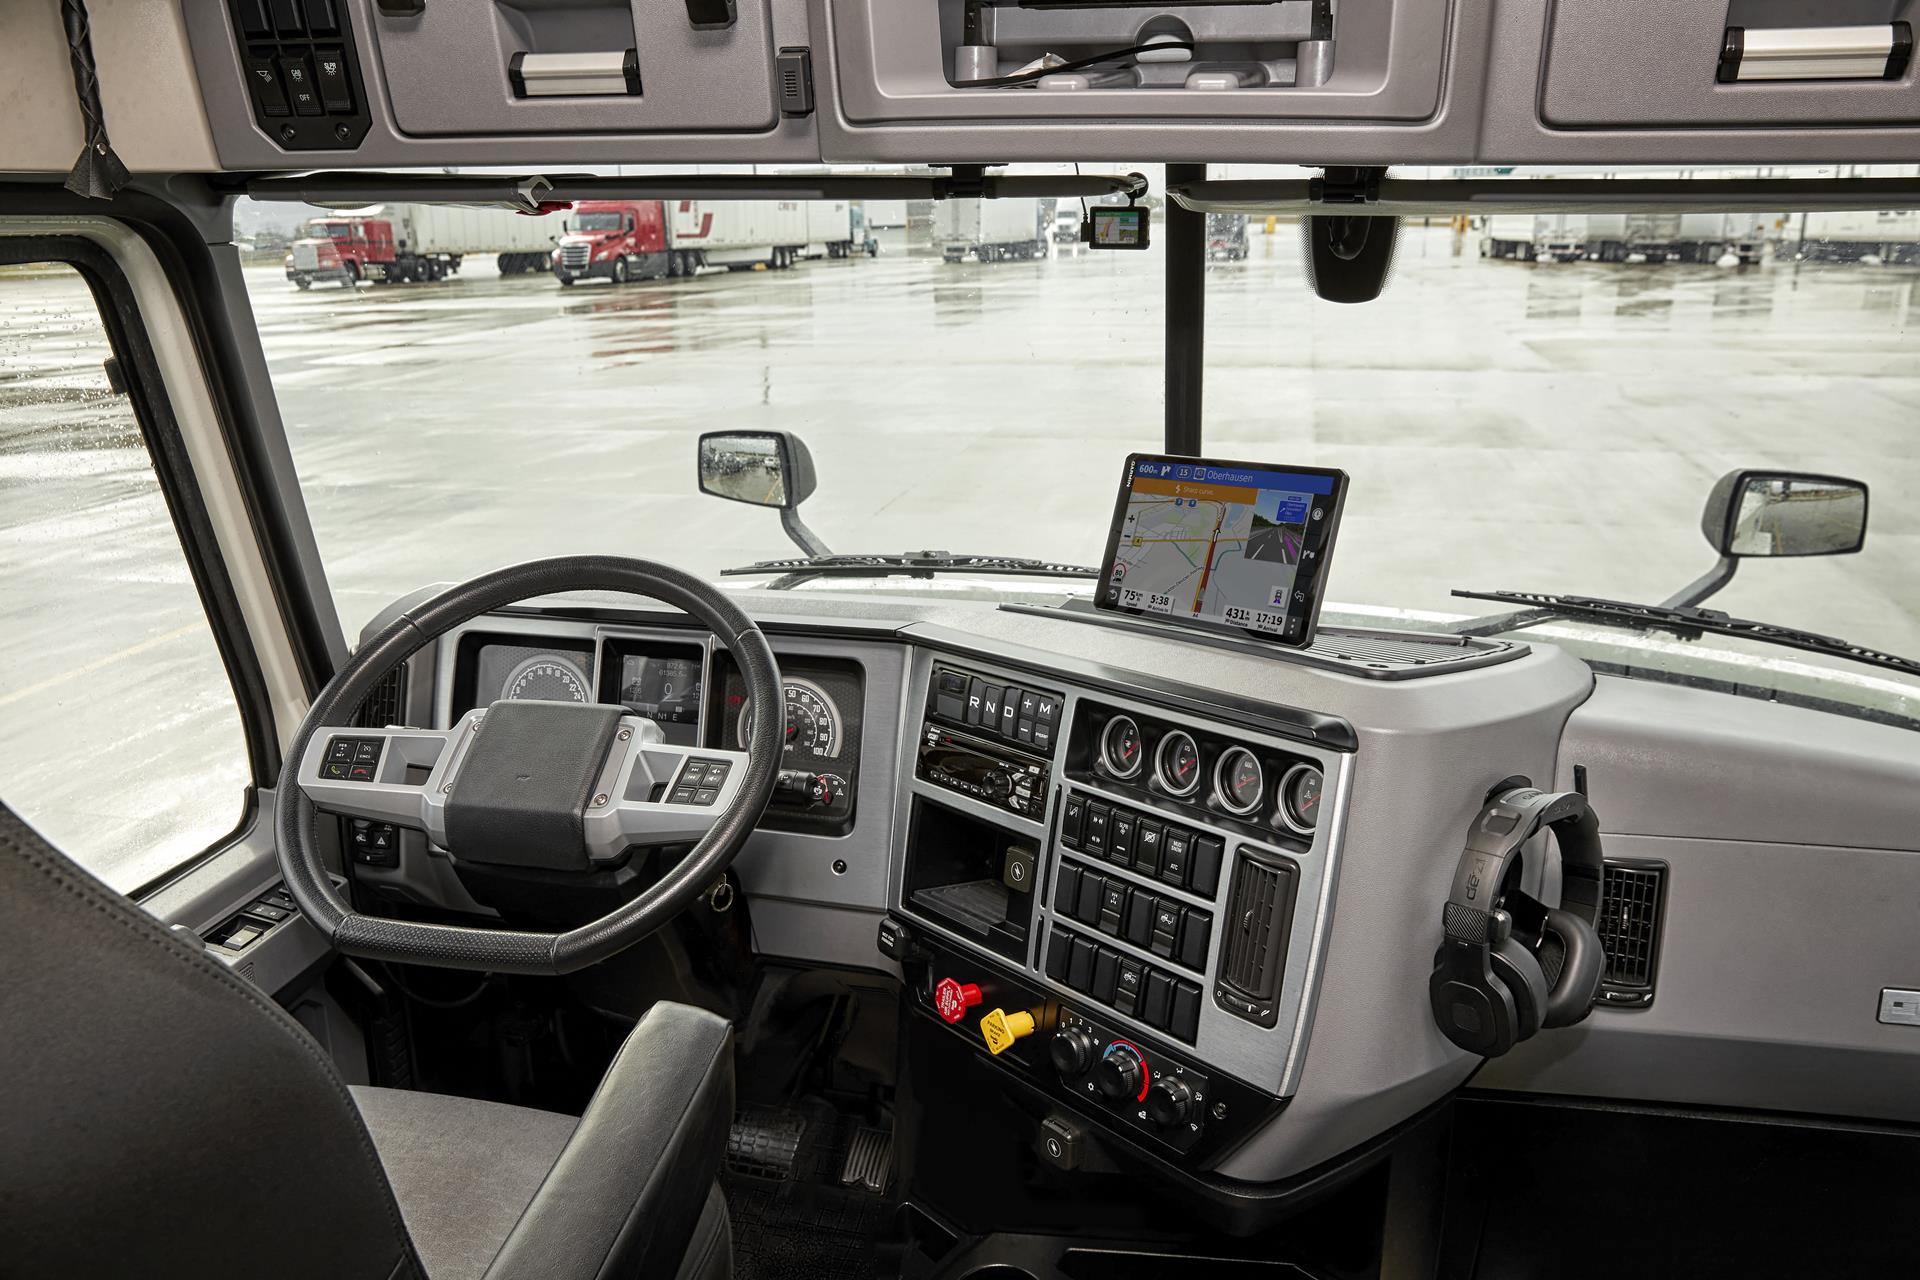 Garmin dēzl LGV1010 10" Truck Satellite Navigation with Digital Traffic